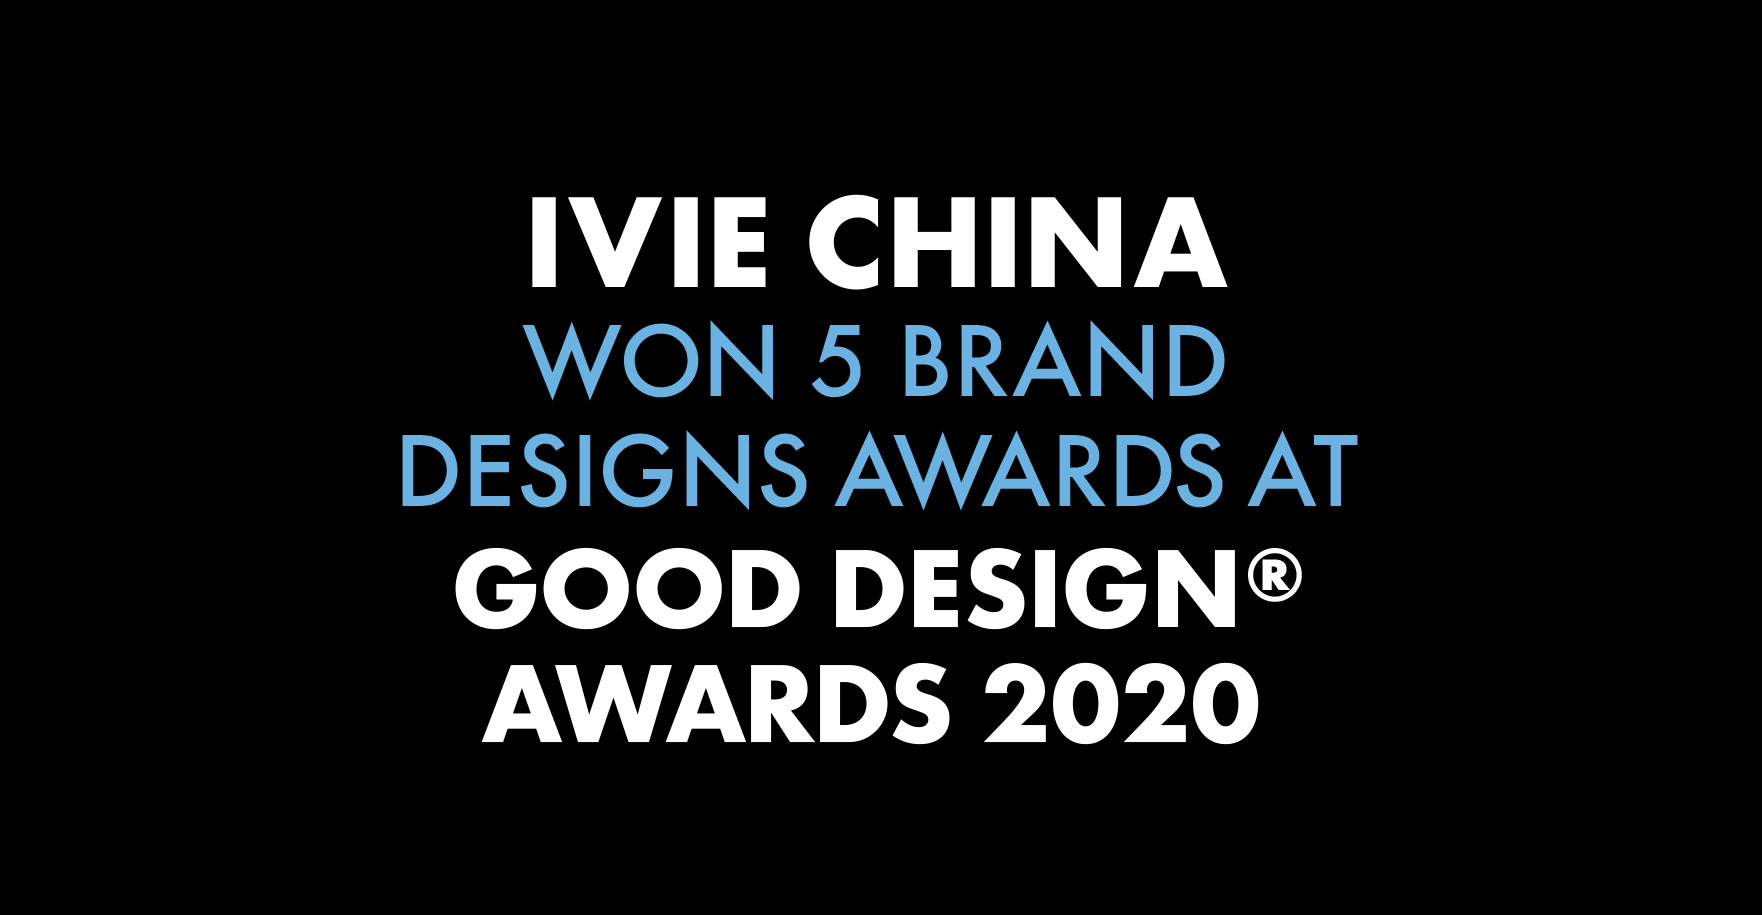 Ivie China won 5 brand designs awards at Good Design® Awards 2020